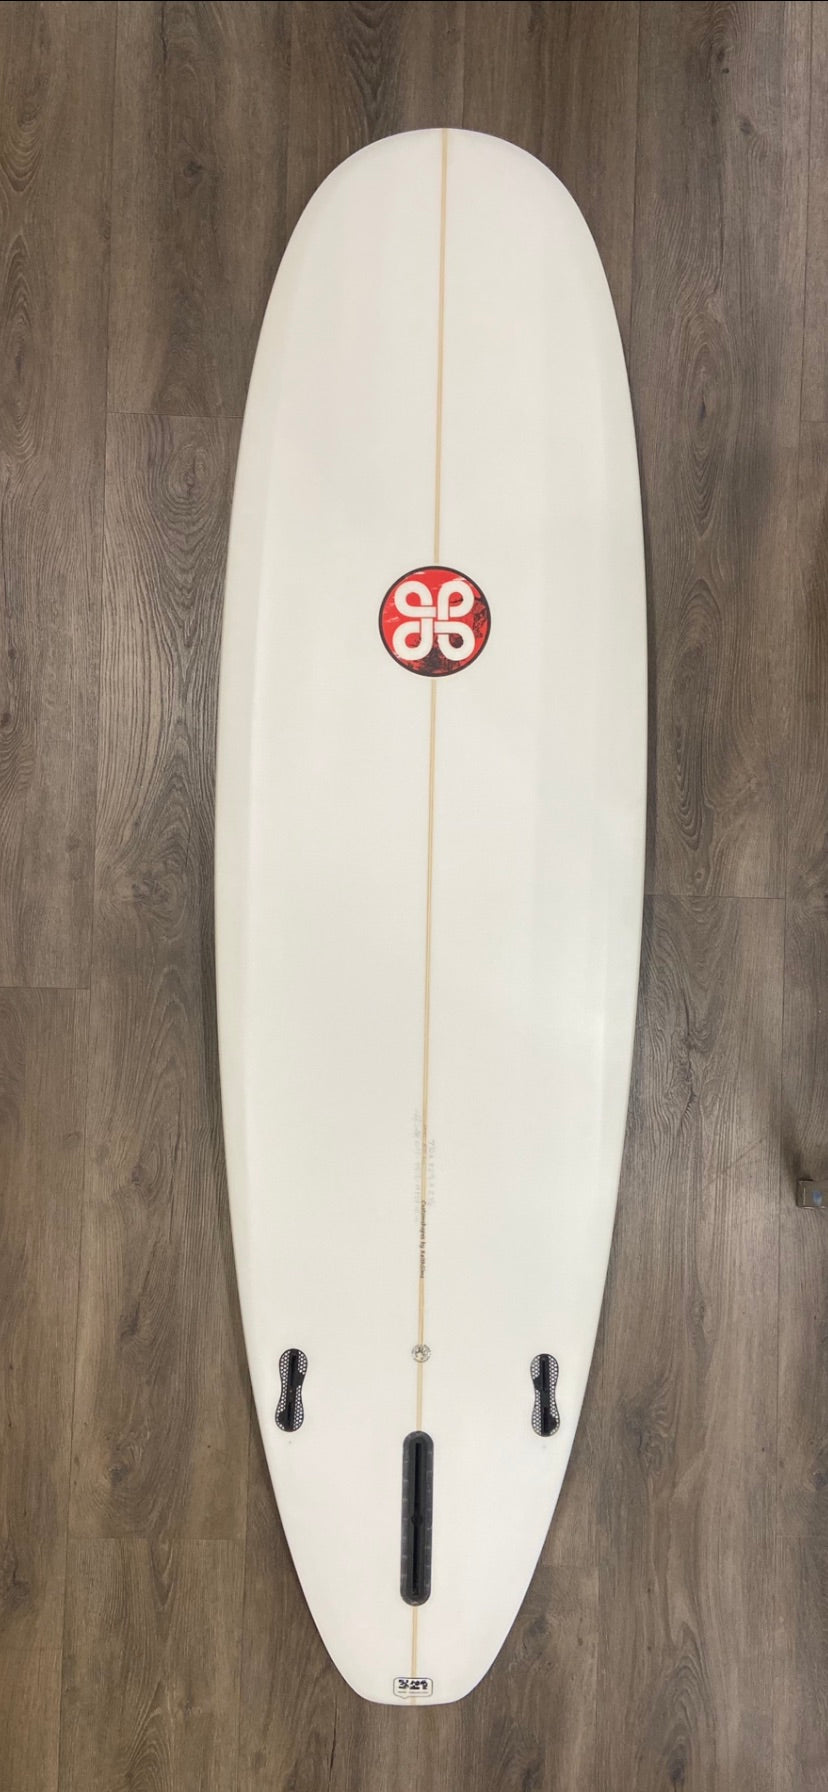 Viking Surfboards 7' Funshape Squash Tail Epoxy Surfboard 2 + 1 Surfboard